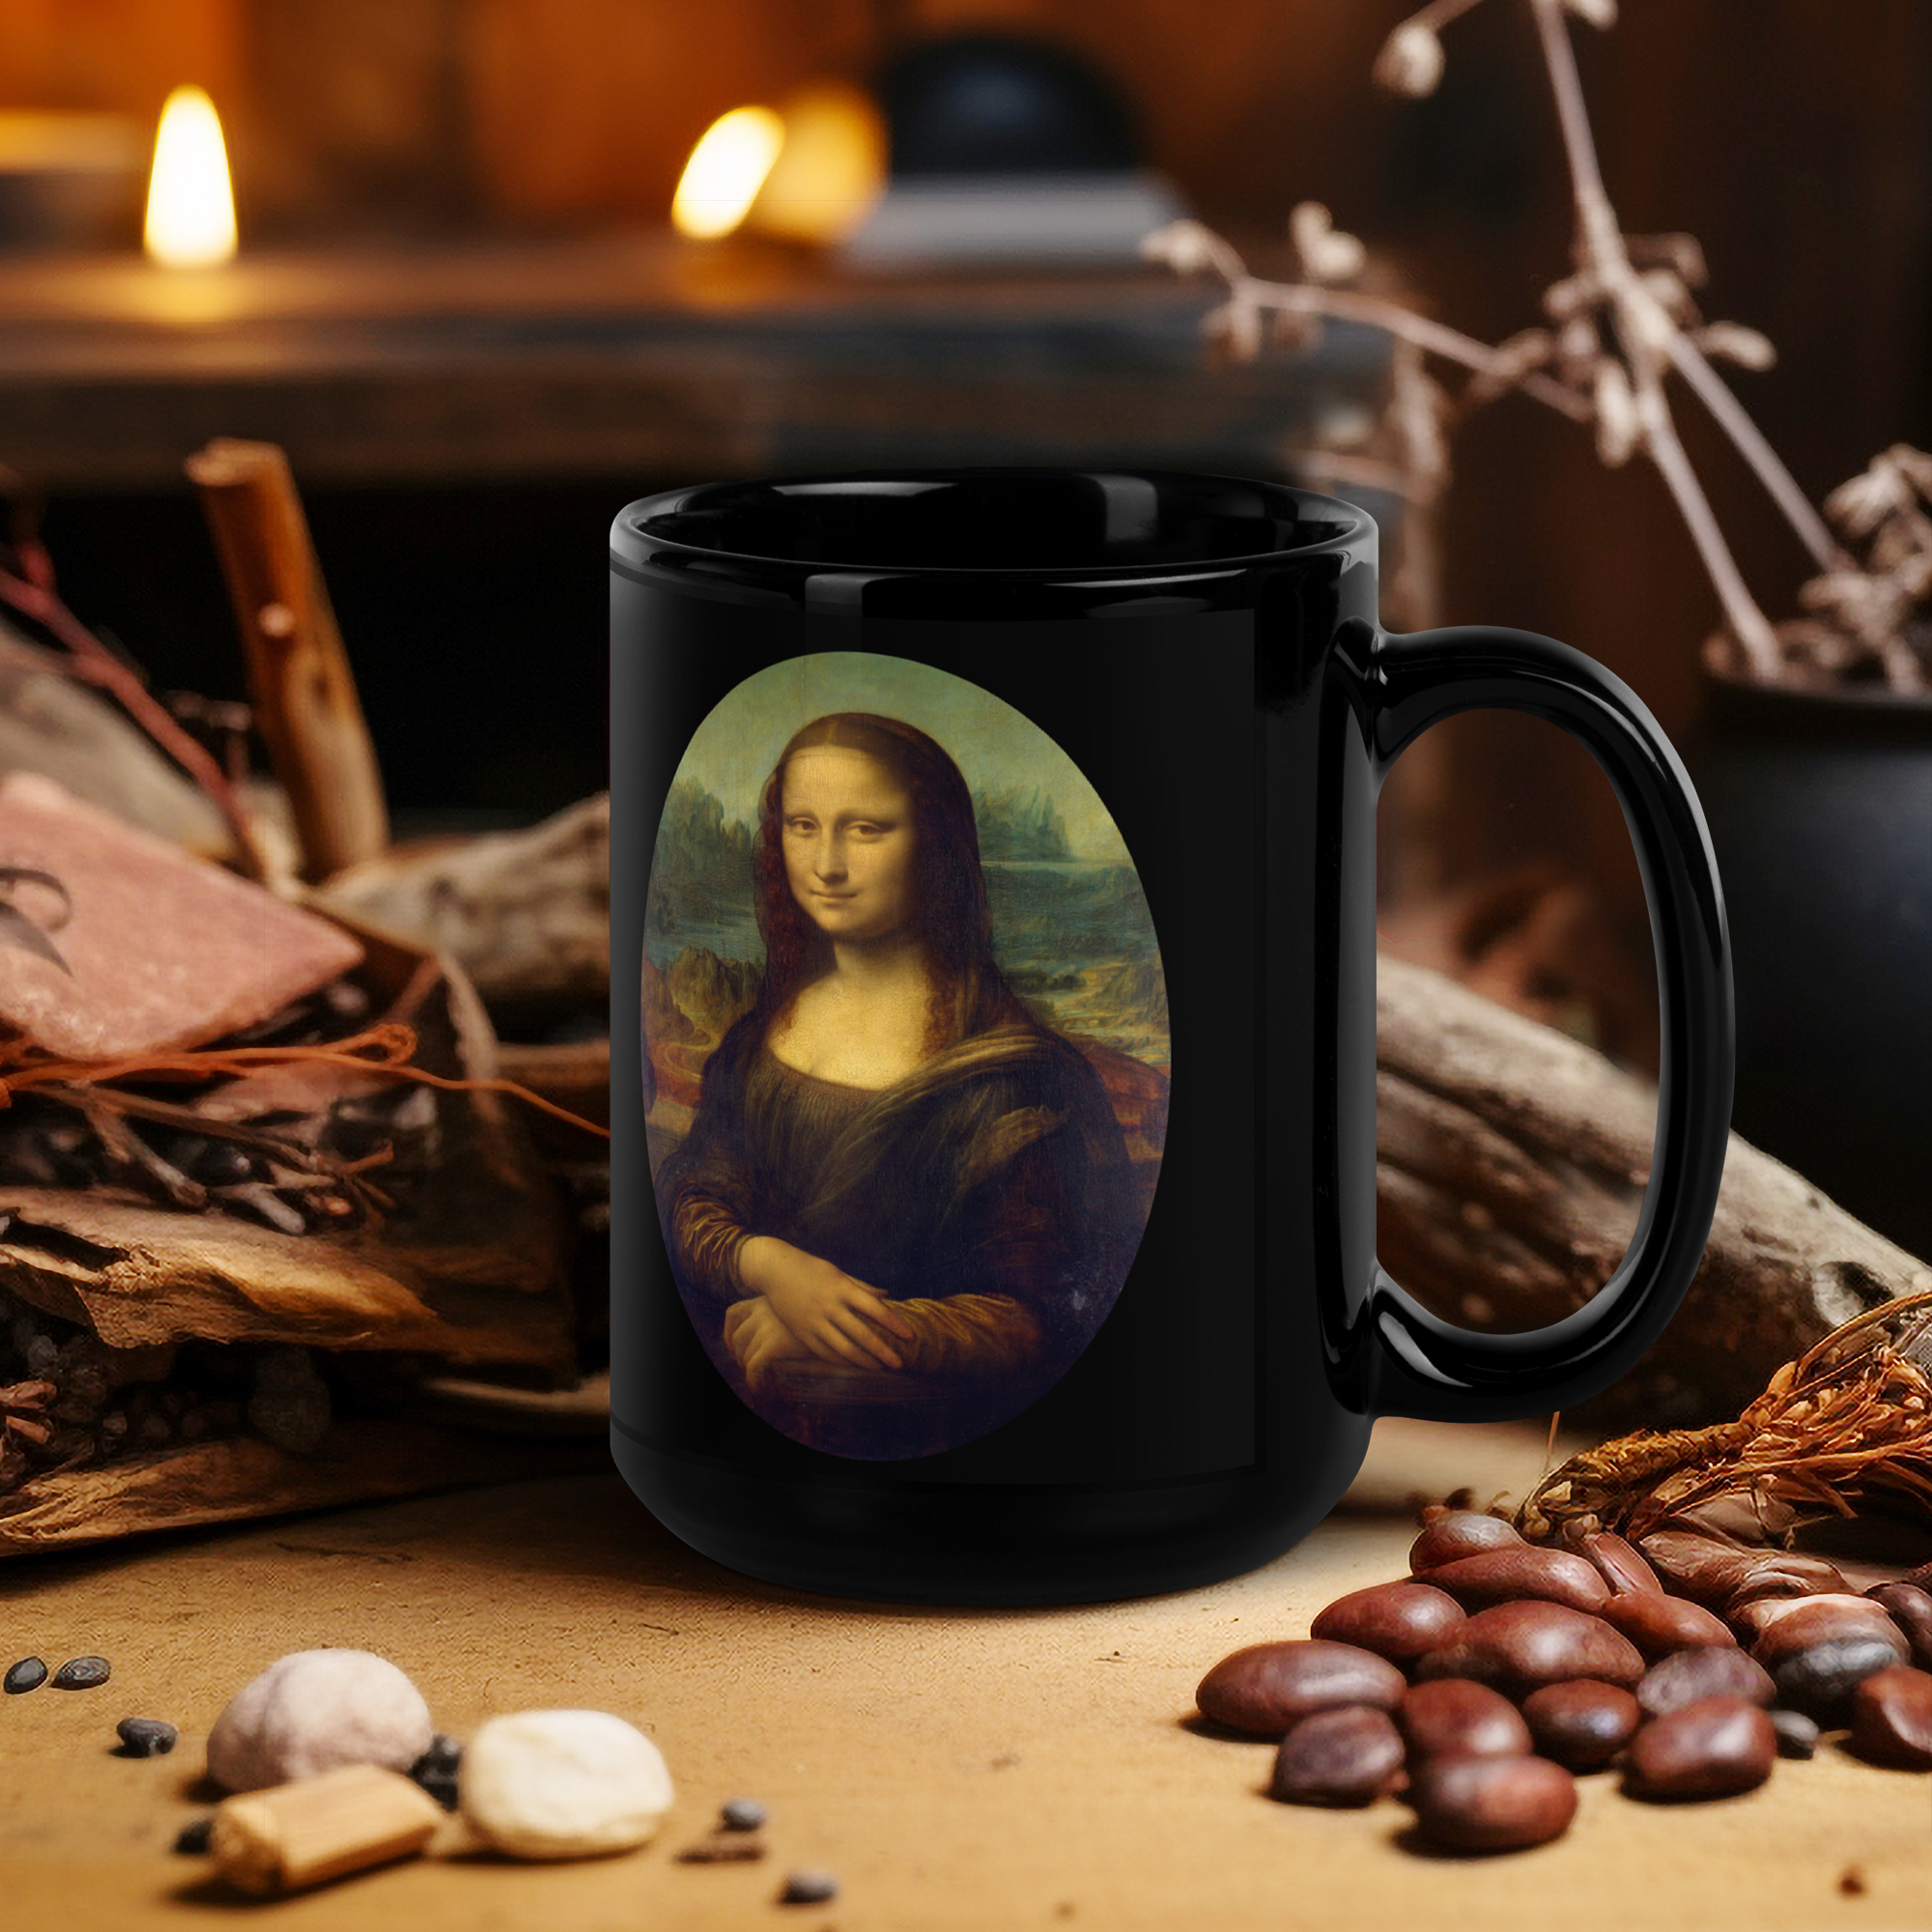 Mona Lisa by Leonardo da Vinci Mug, Dark Academia, Gothic Art, Macabre